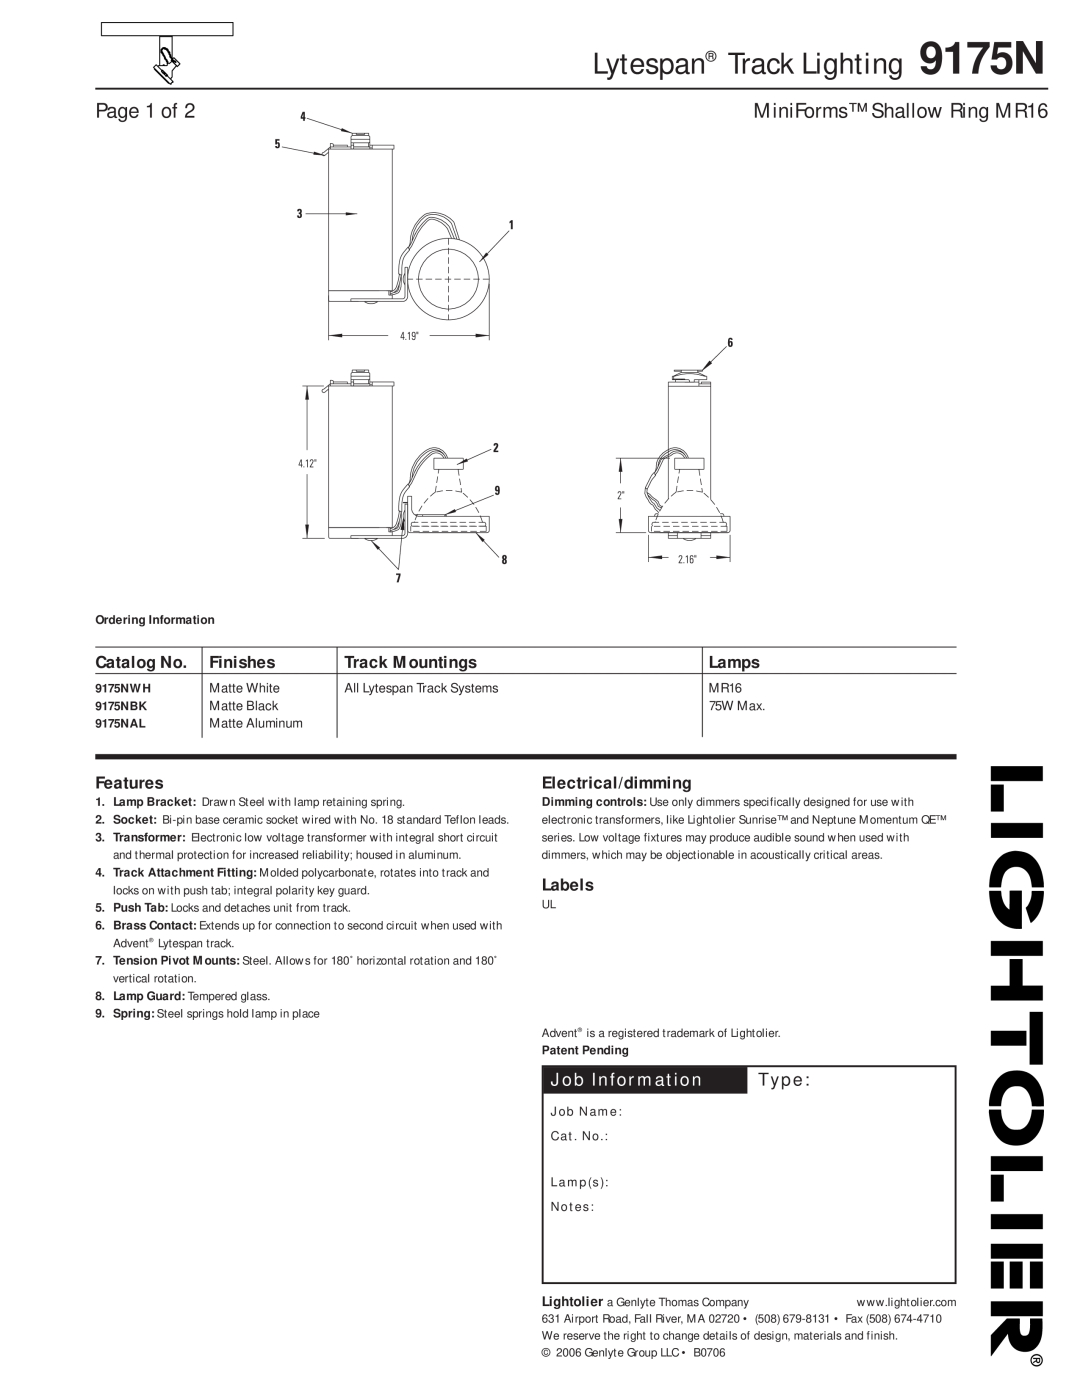 Lightolier manual Lytespan Track Lighting 9175N, Page 1 of, MiniForms Shallow Ring MR16, Job Information, Type, Lamps 